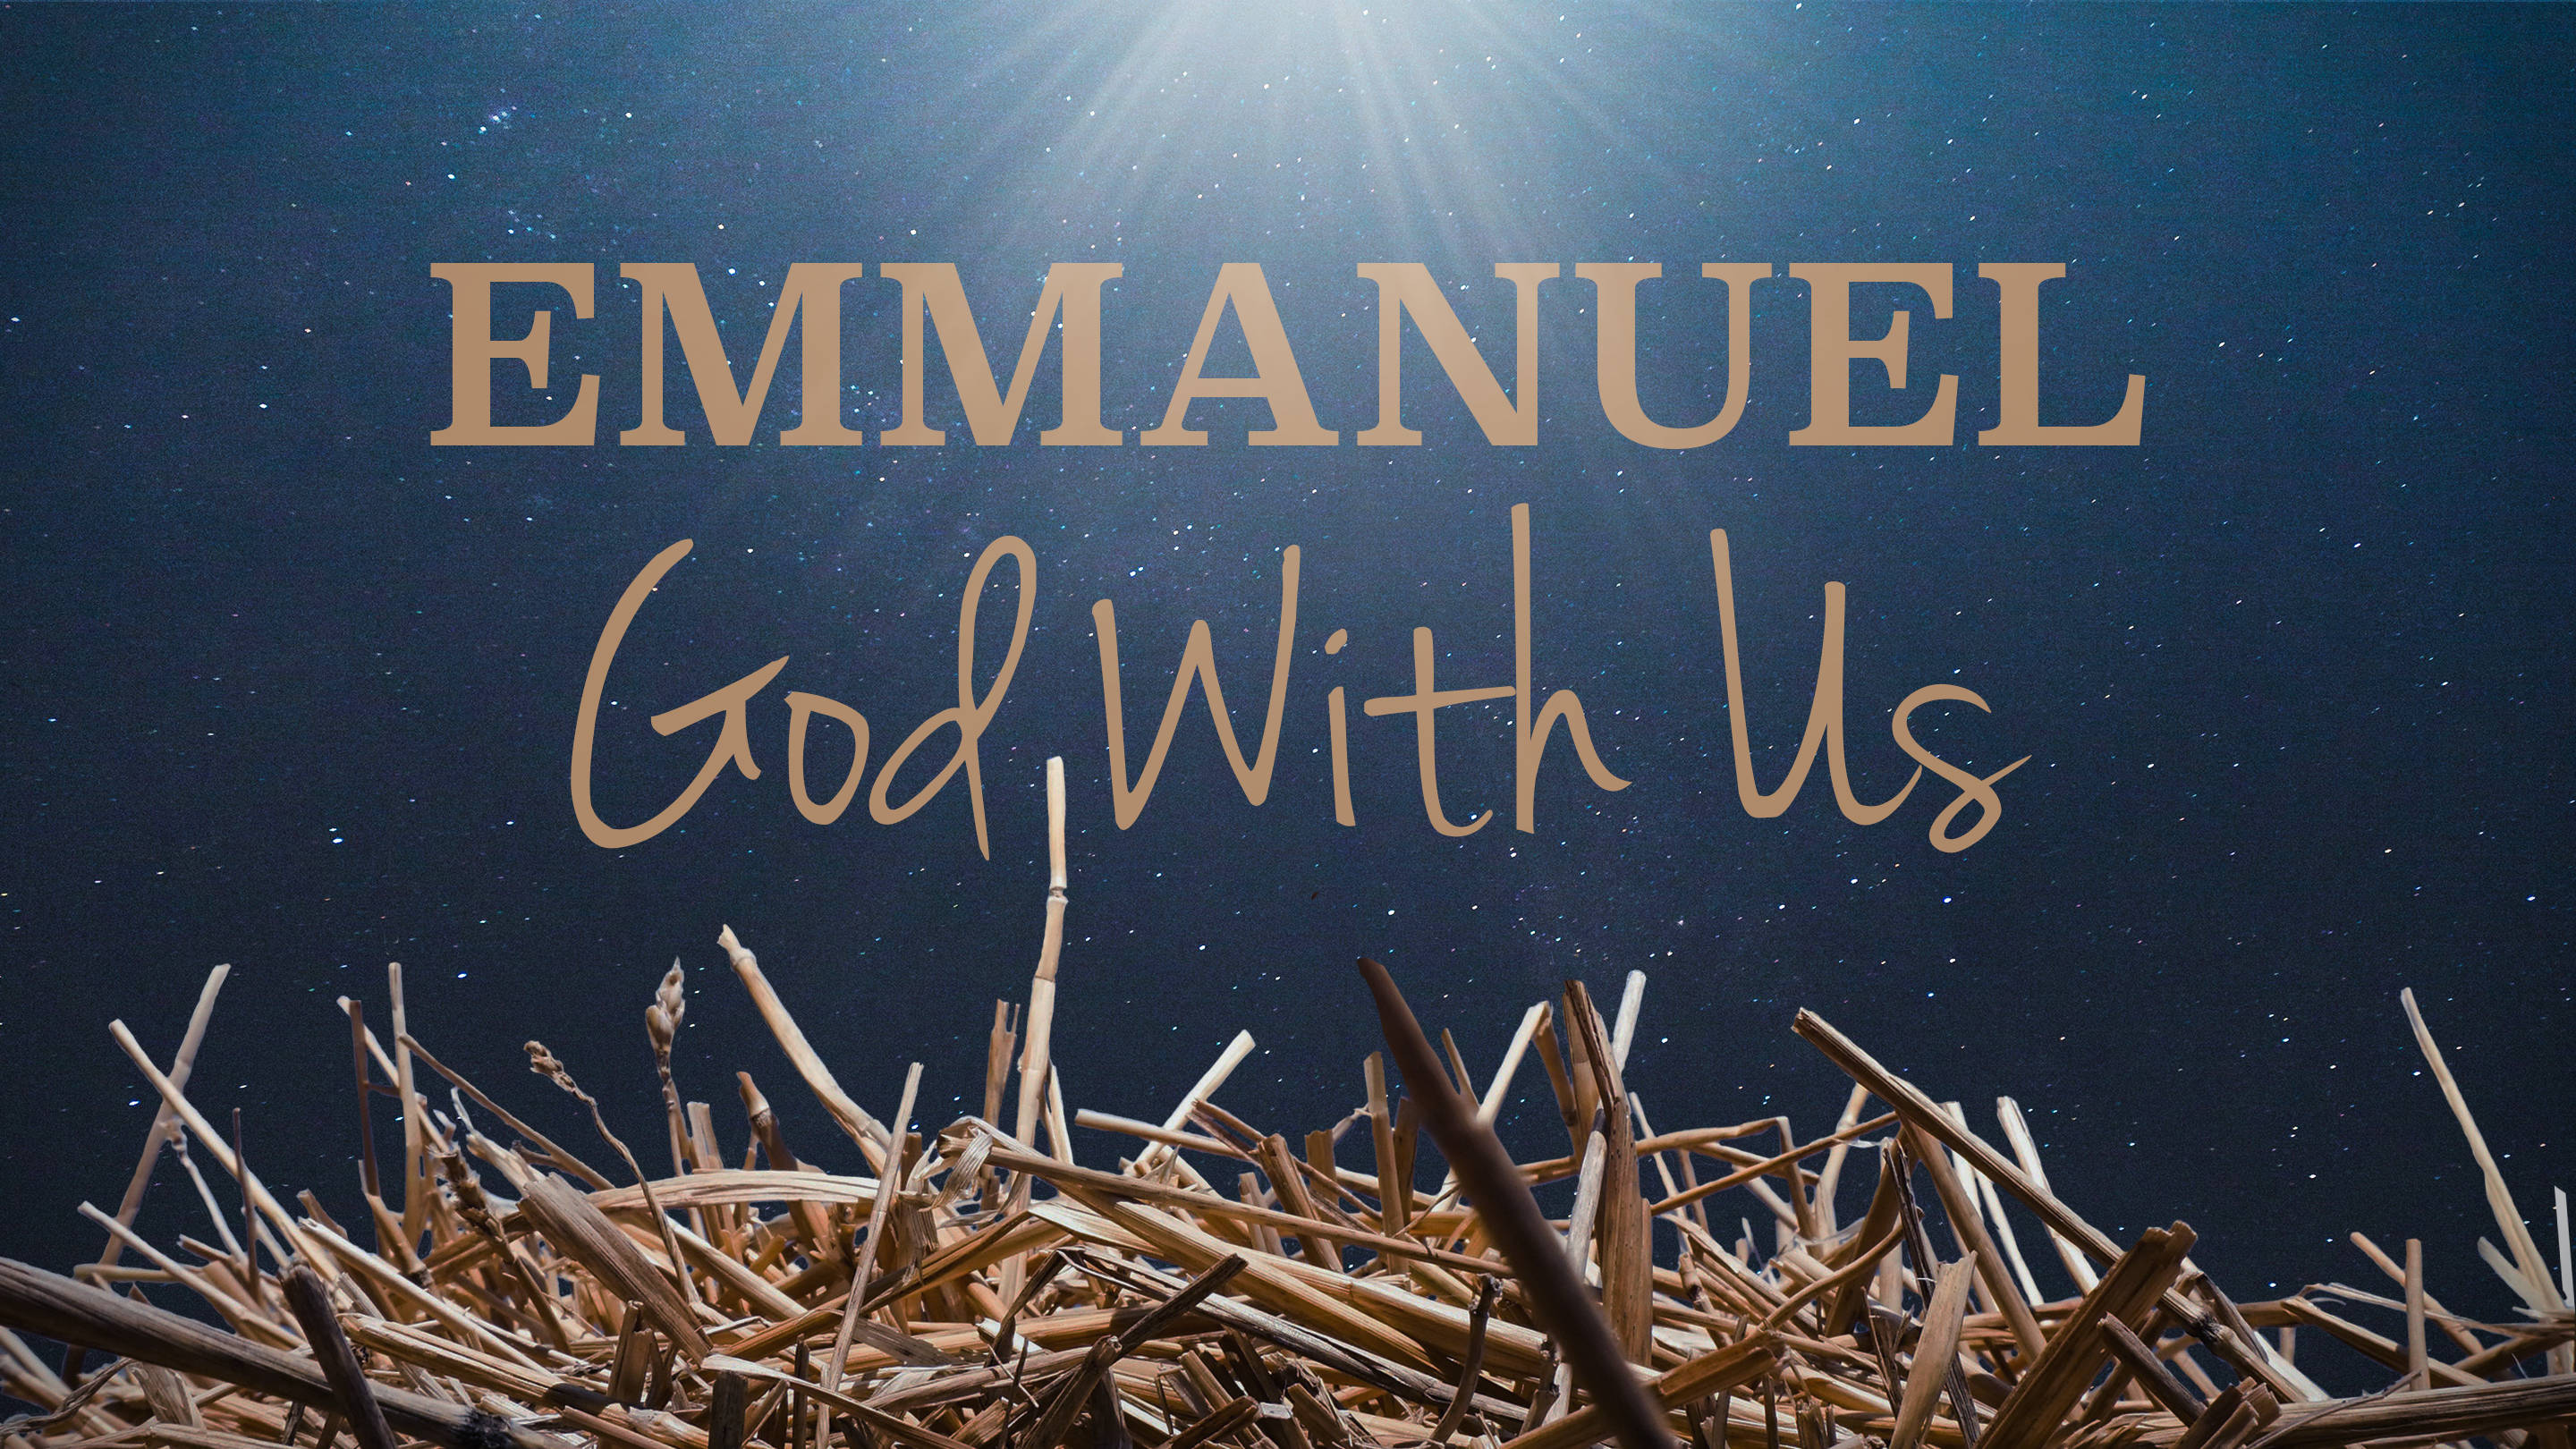 Family Christmas | Emmanuel - God With Us